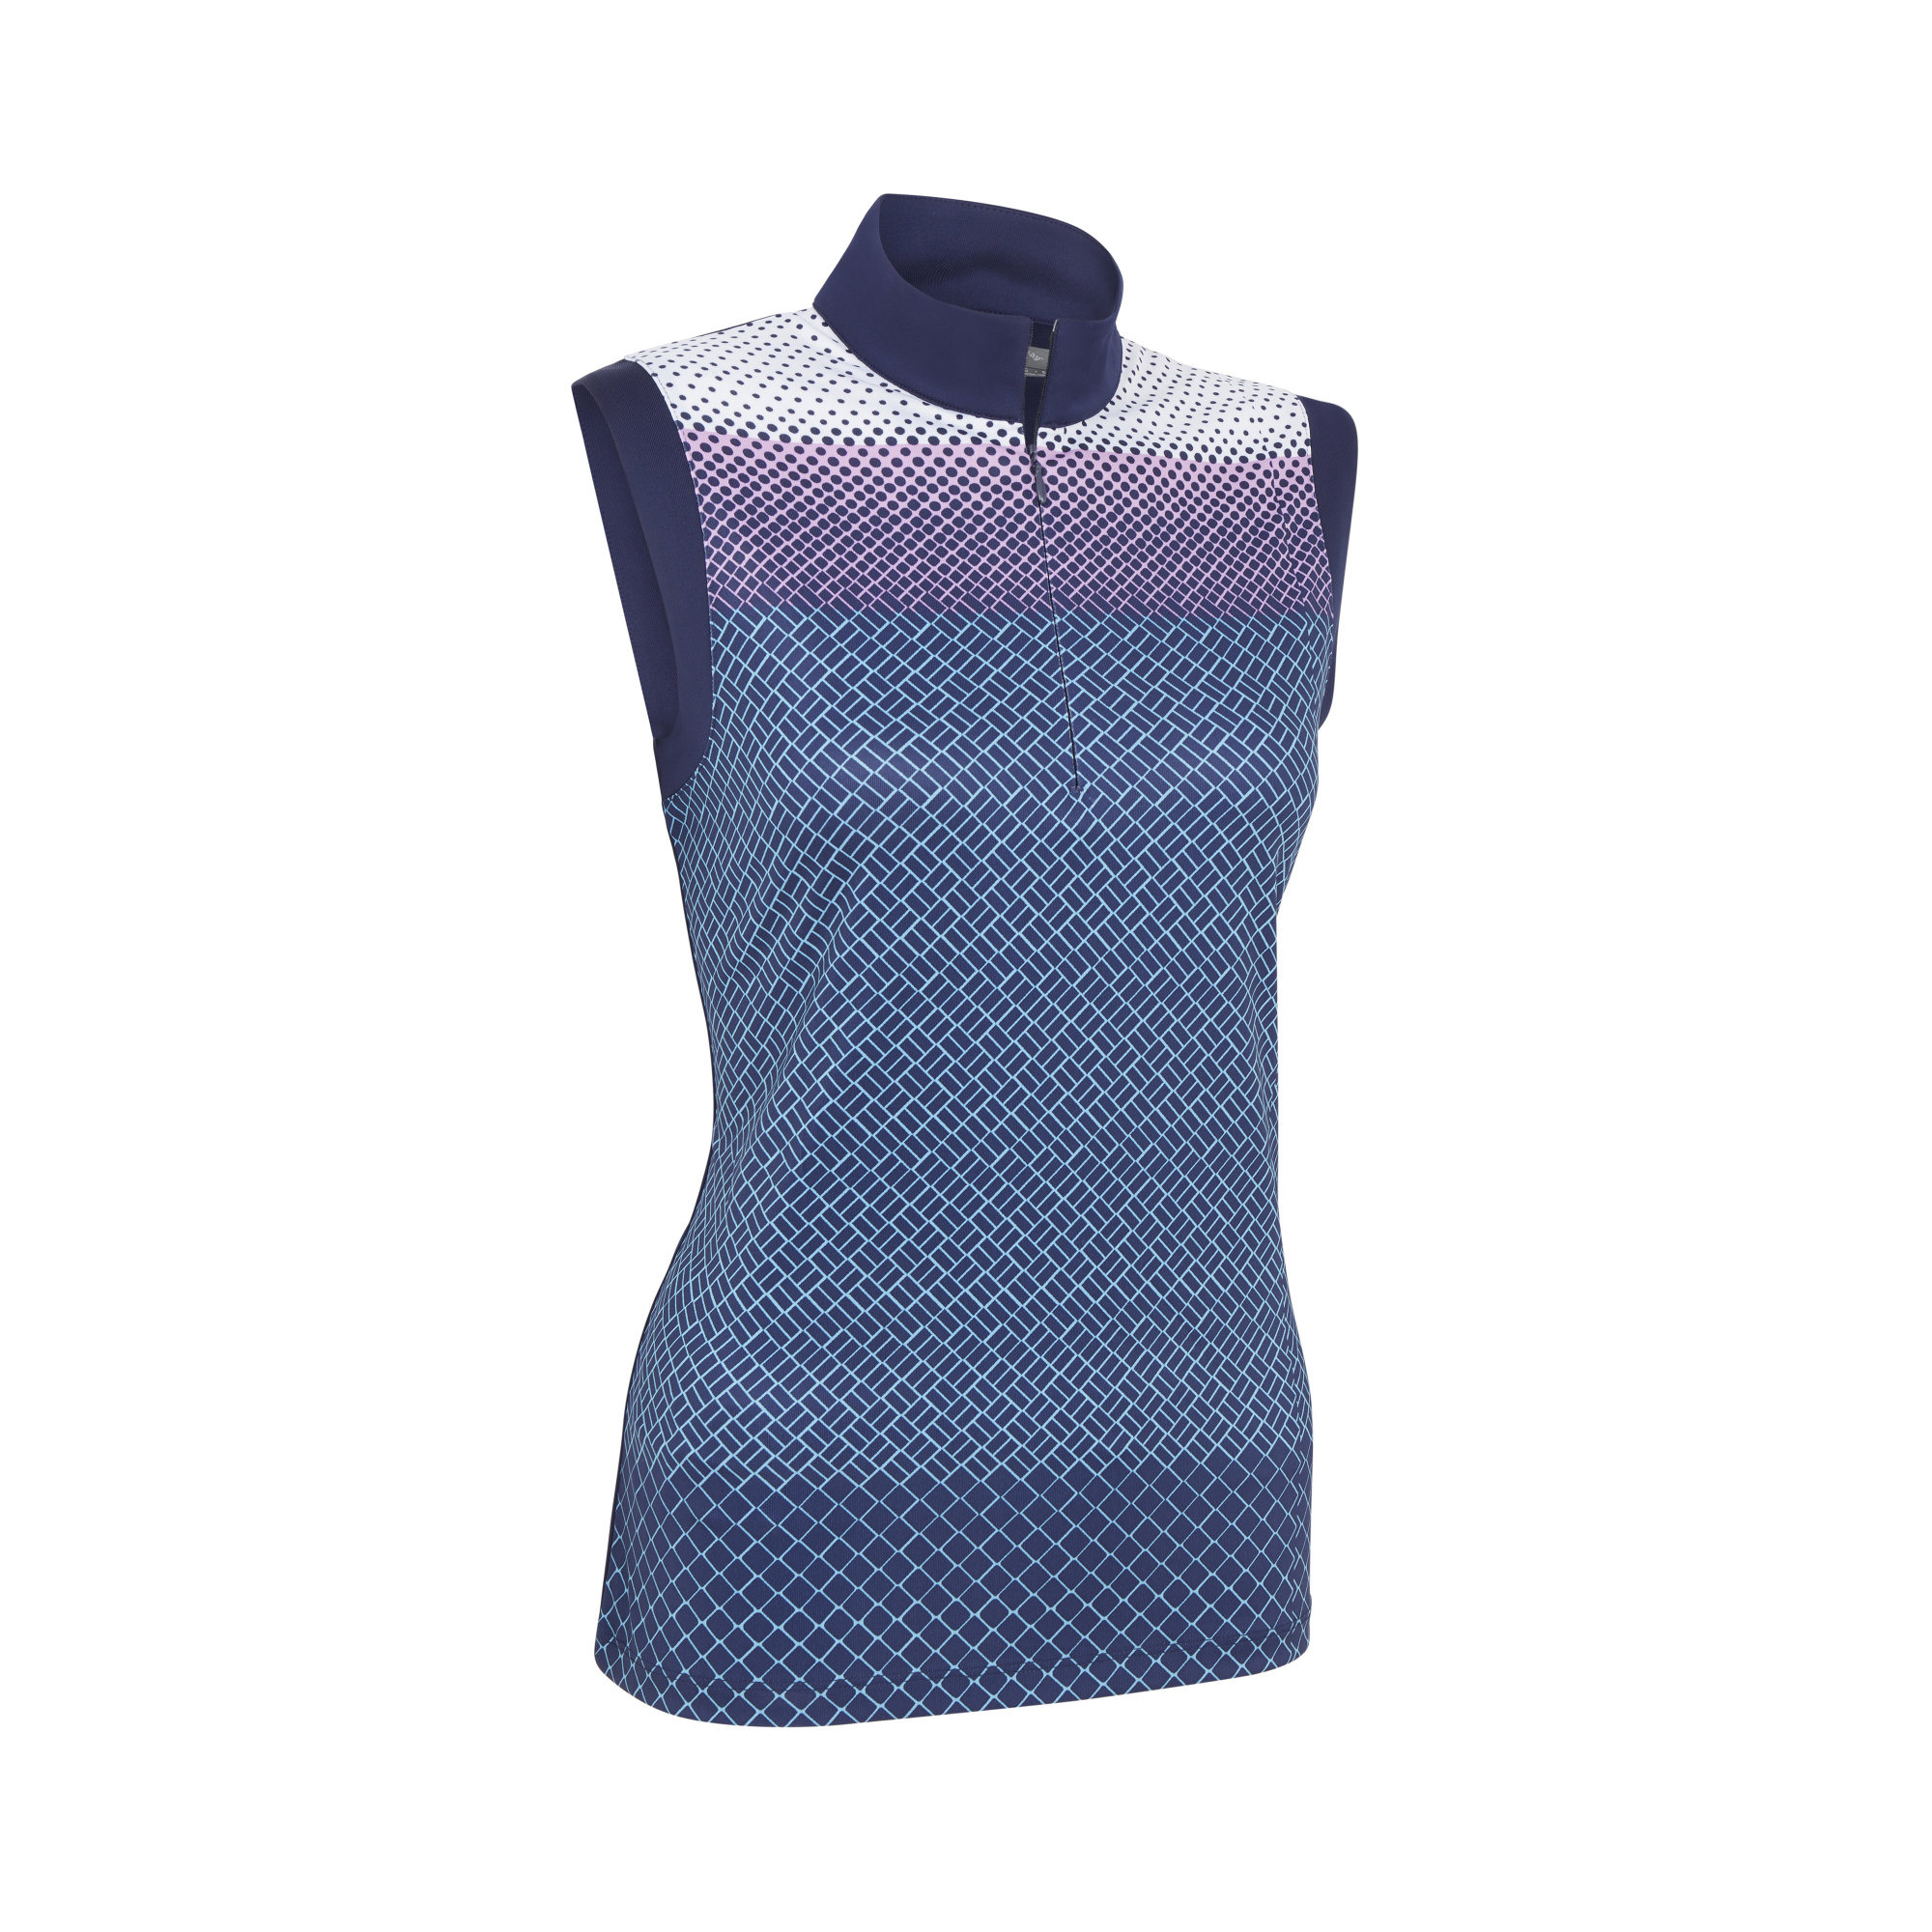 Callaway Zip Mock Gradient Printed dámské golfové triko bez rukávů, tmavě modré, vel. XS